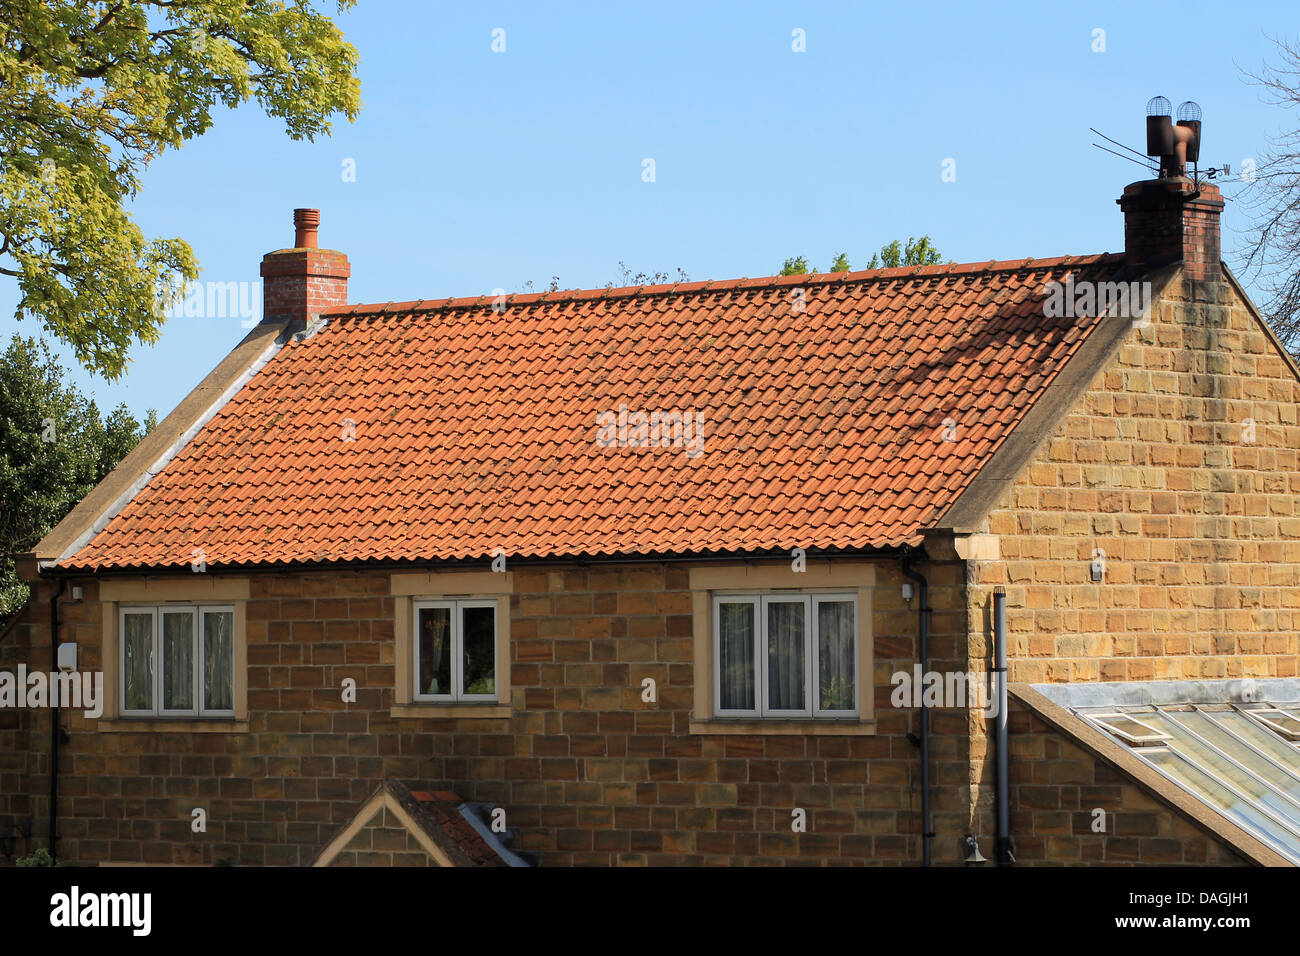 Exterieur des Ziegelhaus mit roten Dachziegeln, England. Stockfoto